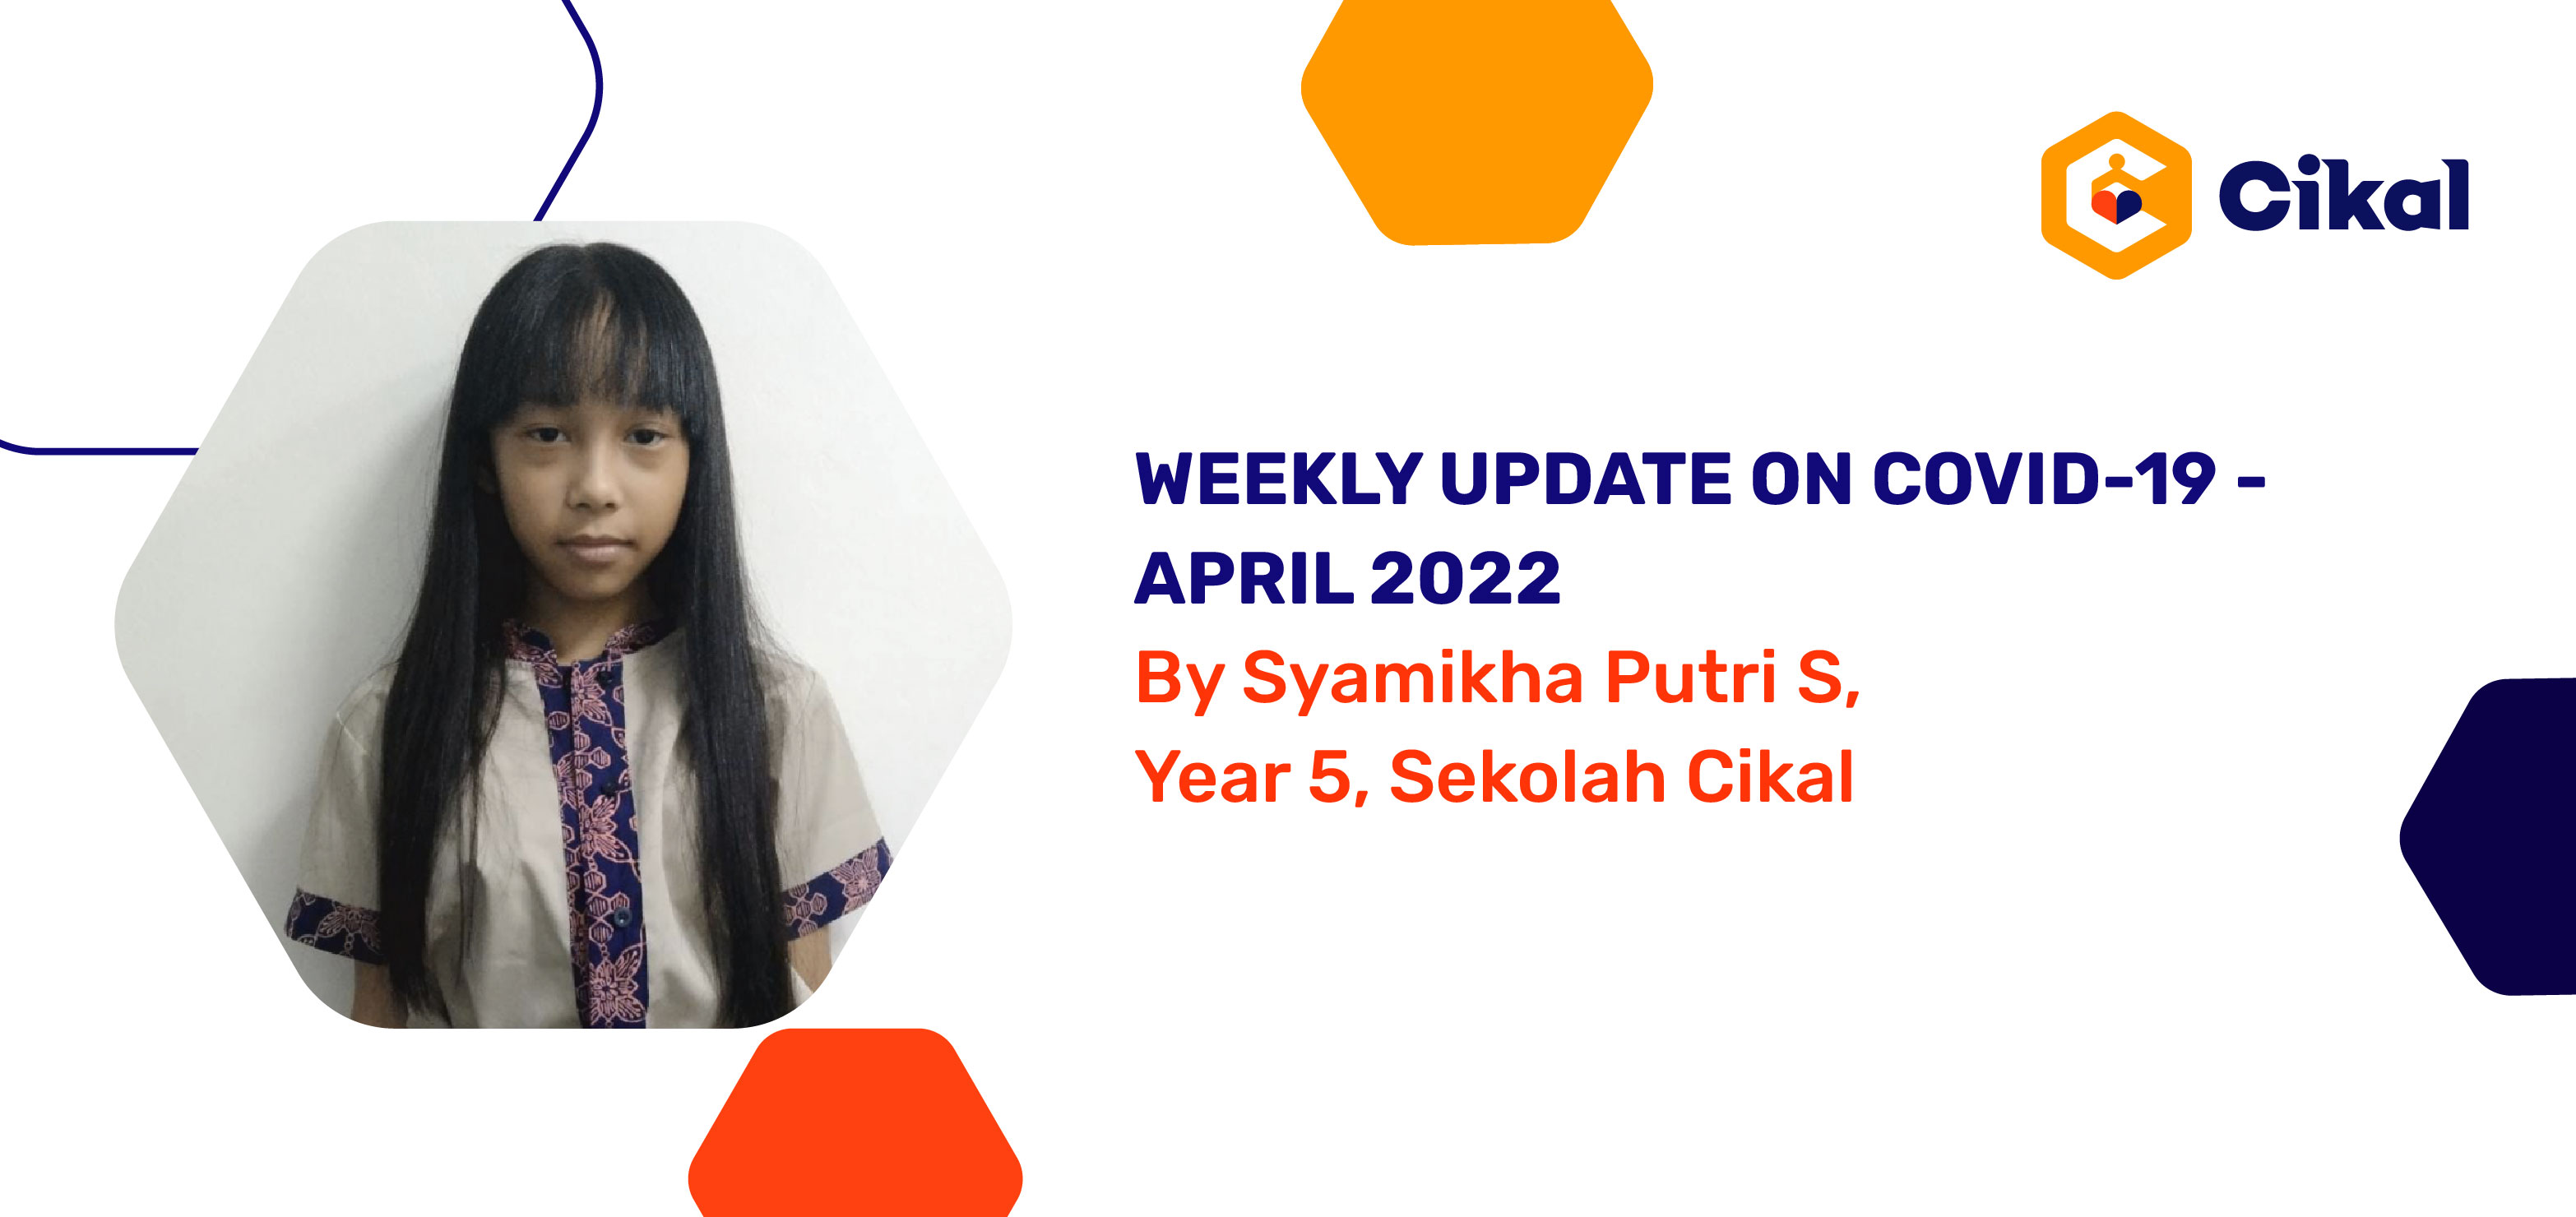 Weekly Update on Covid-19 - April 2022 By Syamikha Putri S, Year 5, Sekolah Cikal 